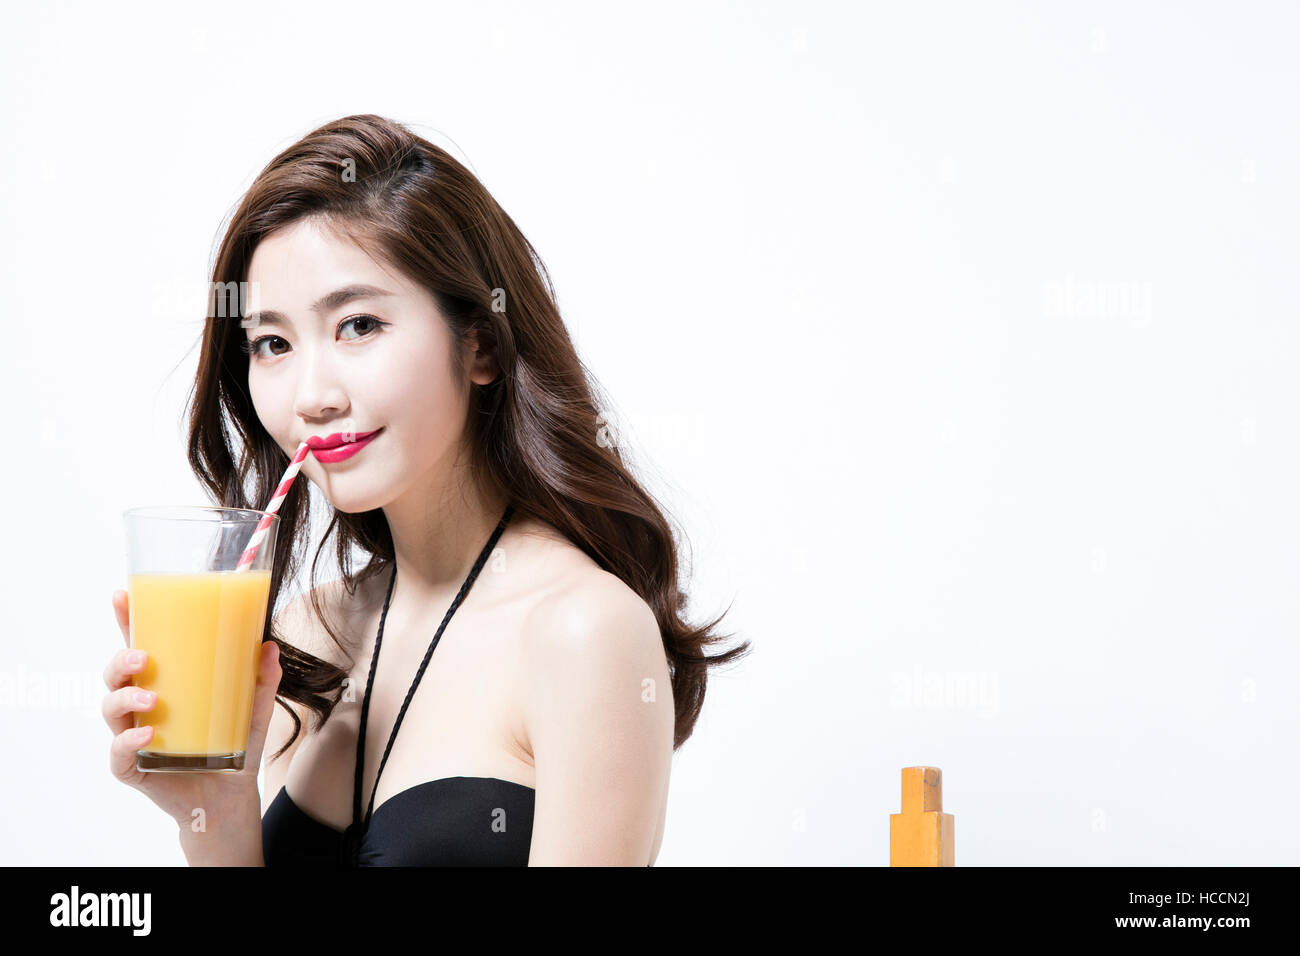 Portrait of young woman in bikini drinking juice Stock Photo